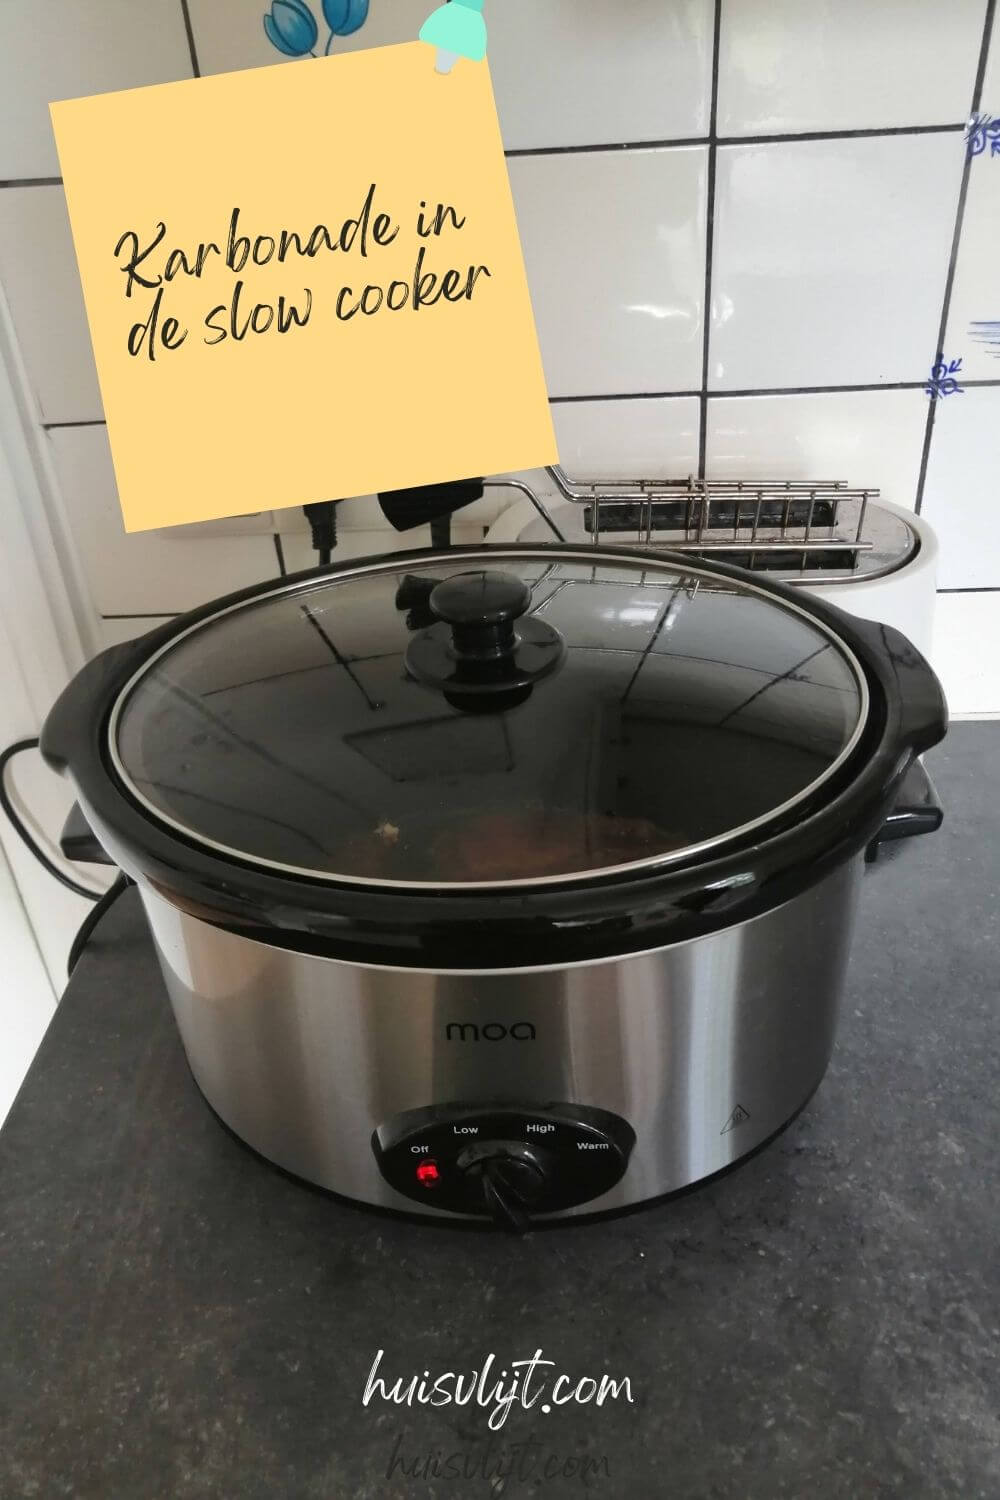 Karbonade slow cooker #fail! Wat ging er mis?!